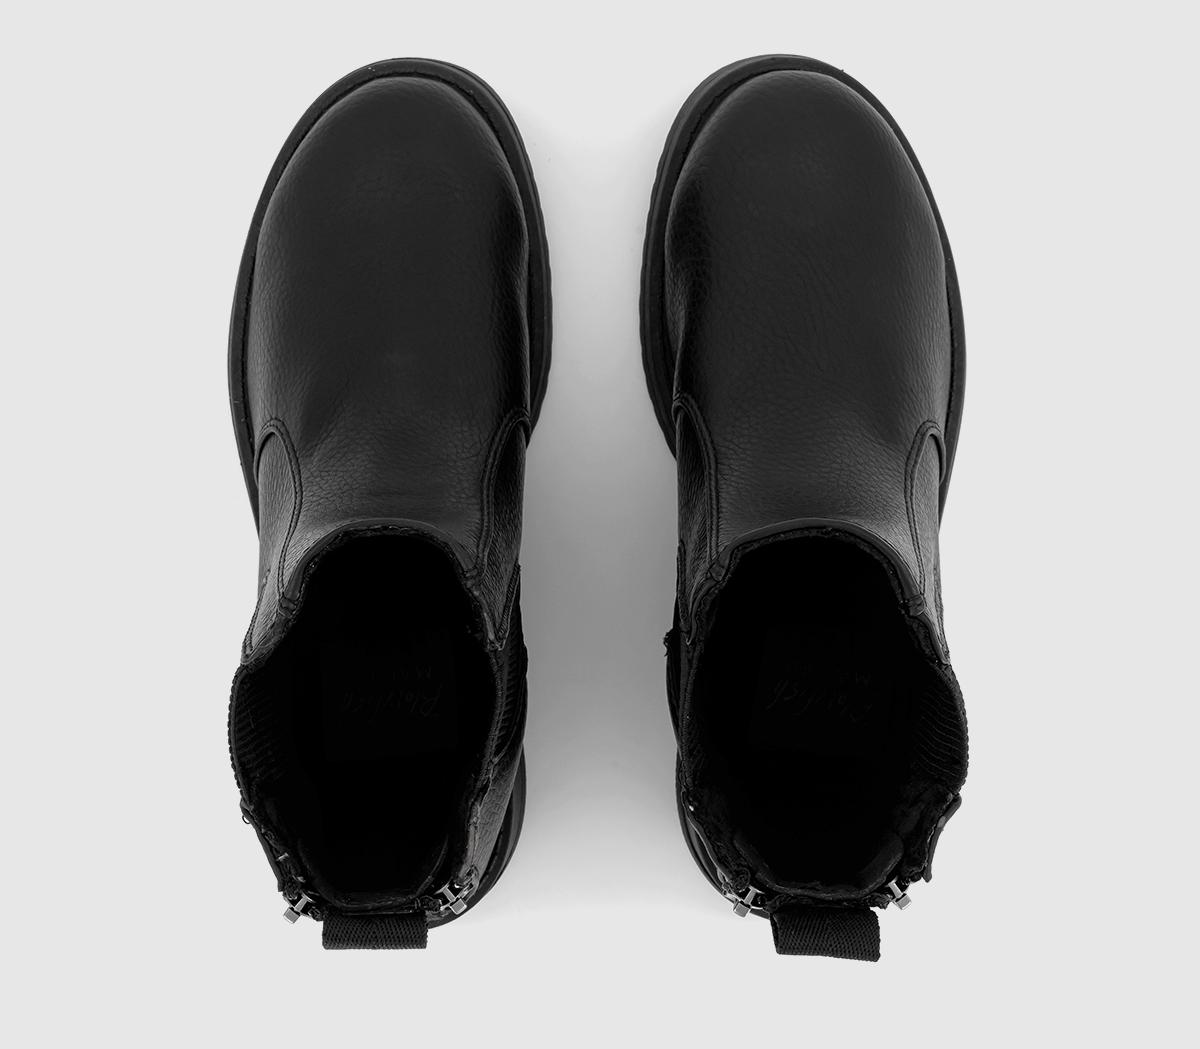 Blowfish Malibu Calo Chelsea Boots Black - Women's Ankle Boots